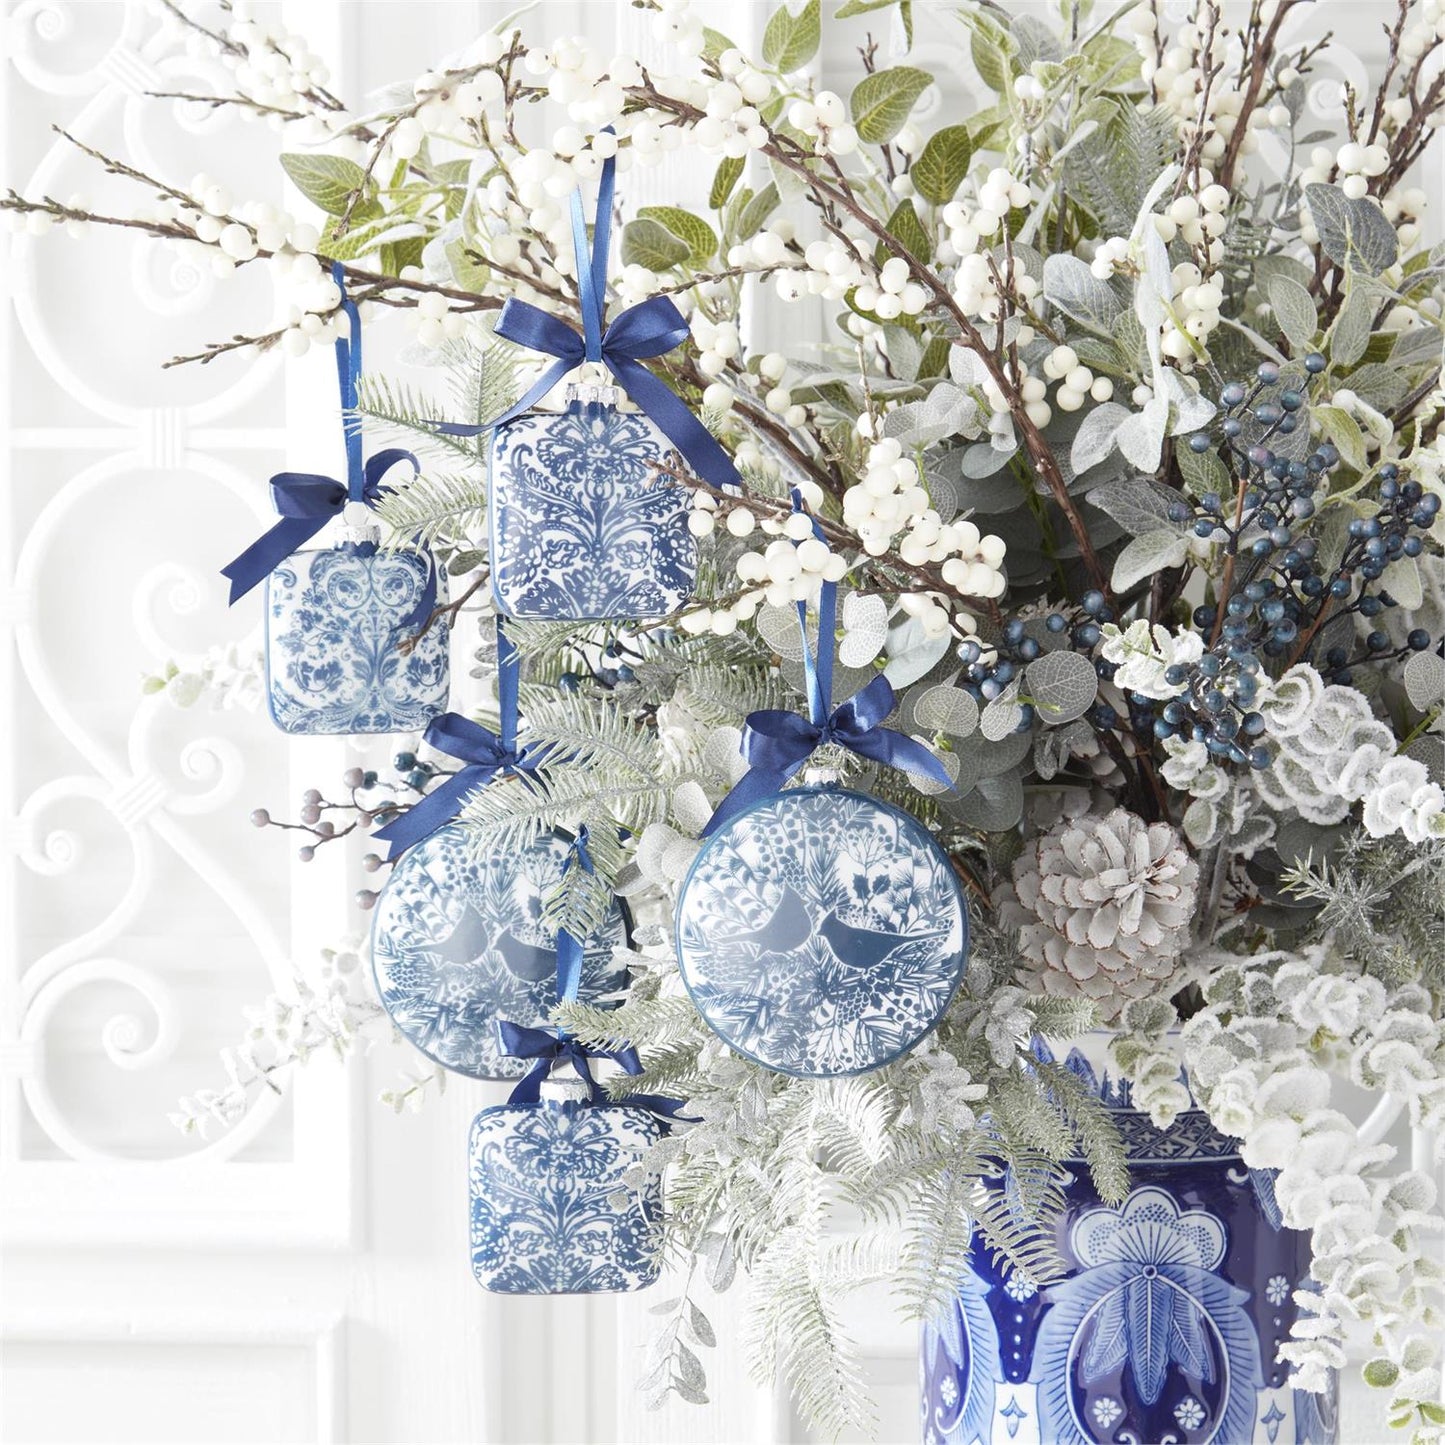 5 Inch Blue & White Floral Print w/Birds Flat Round Glass Ornament